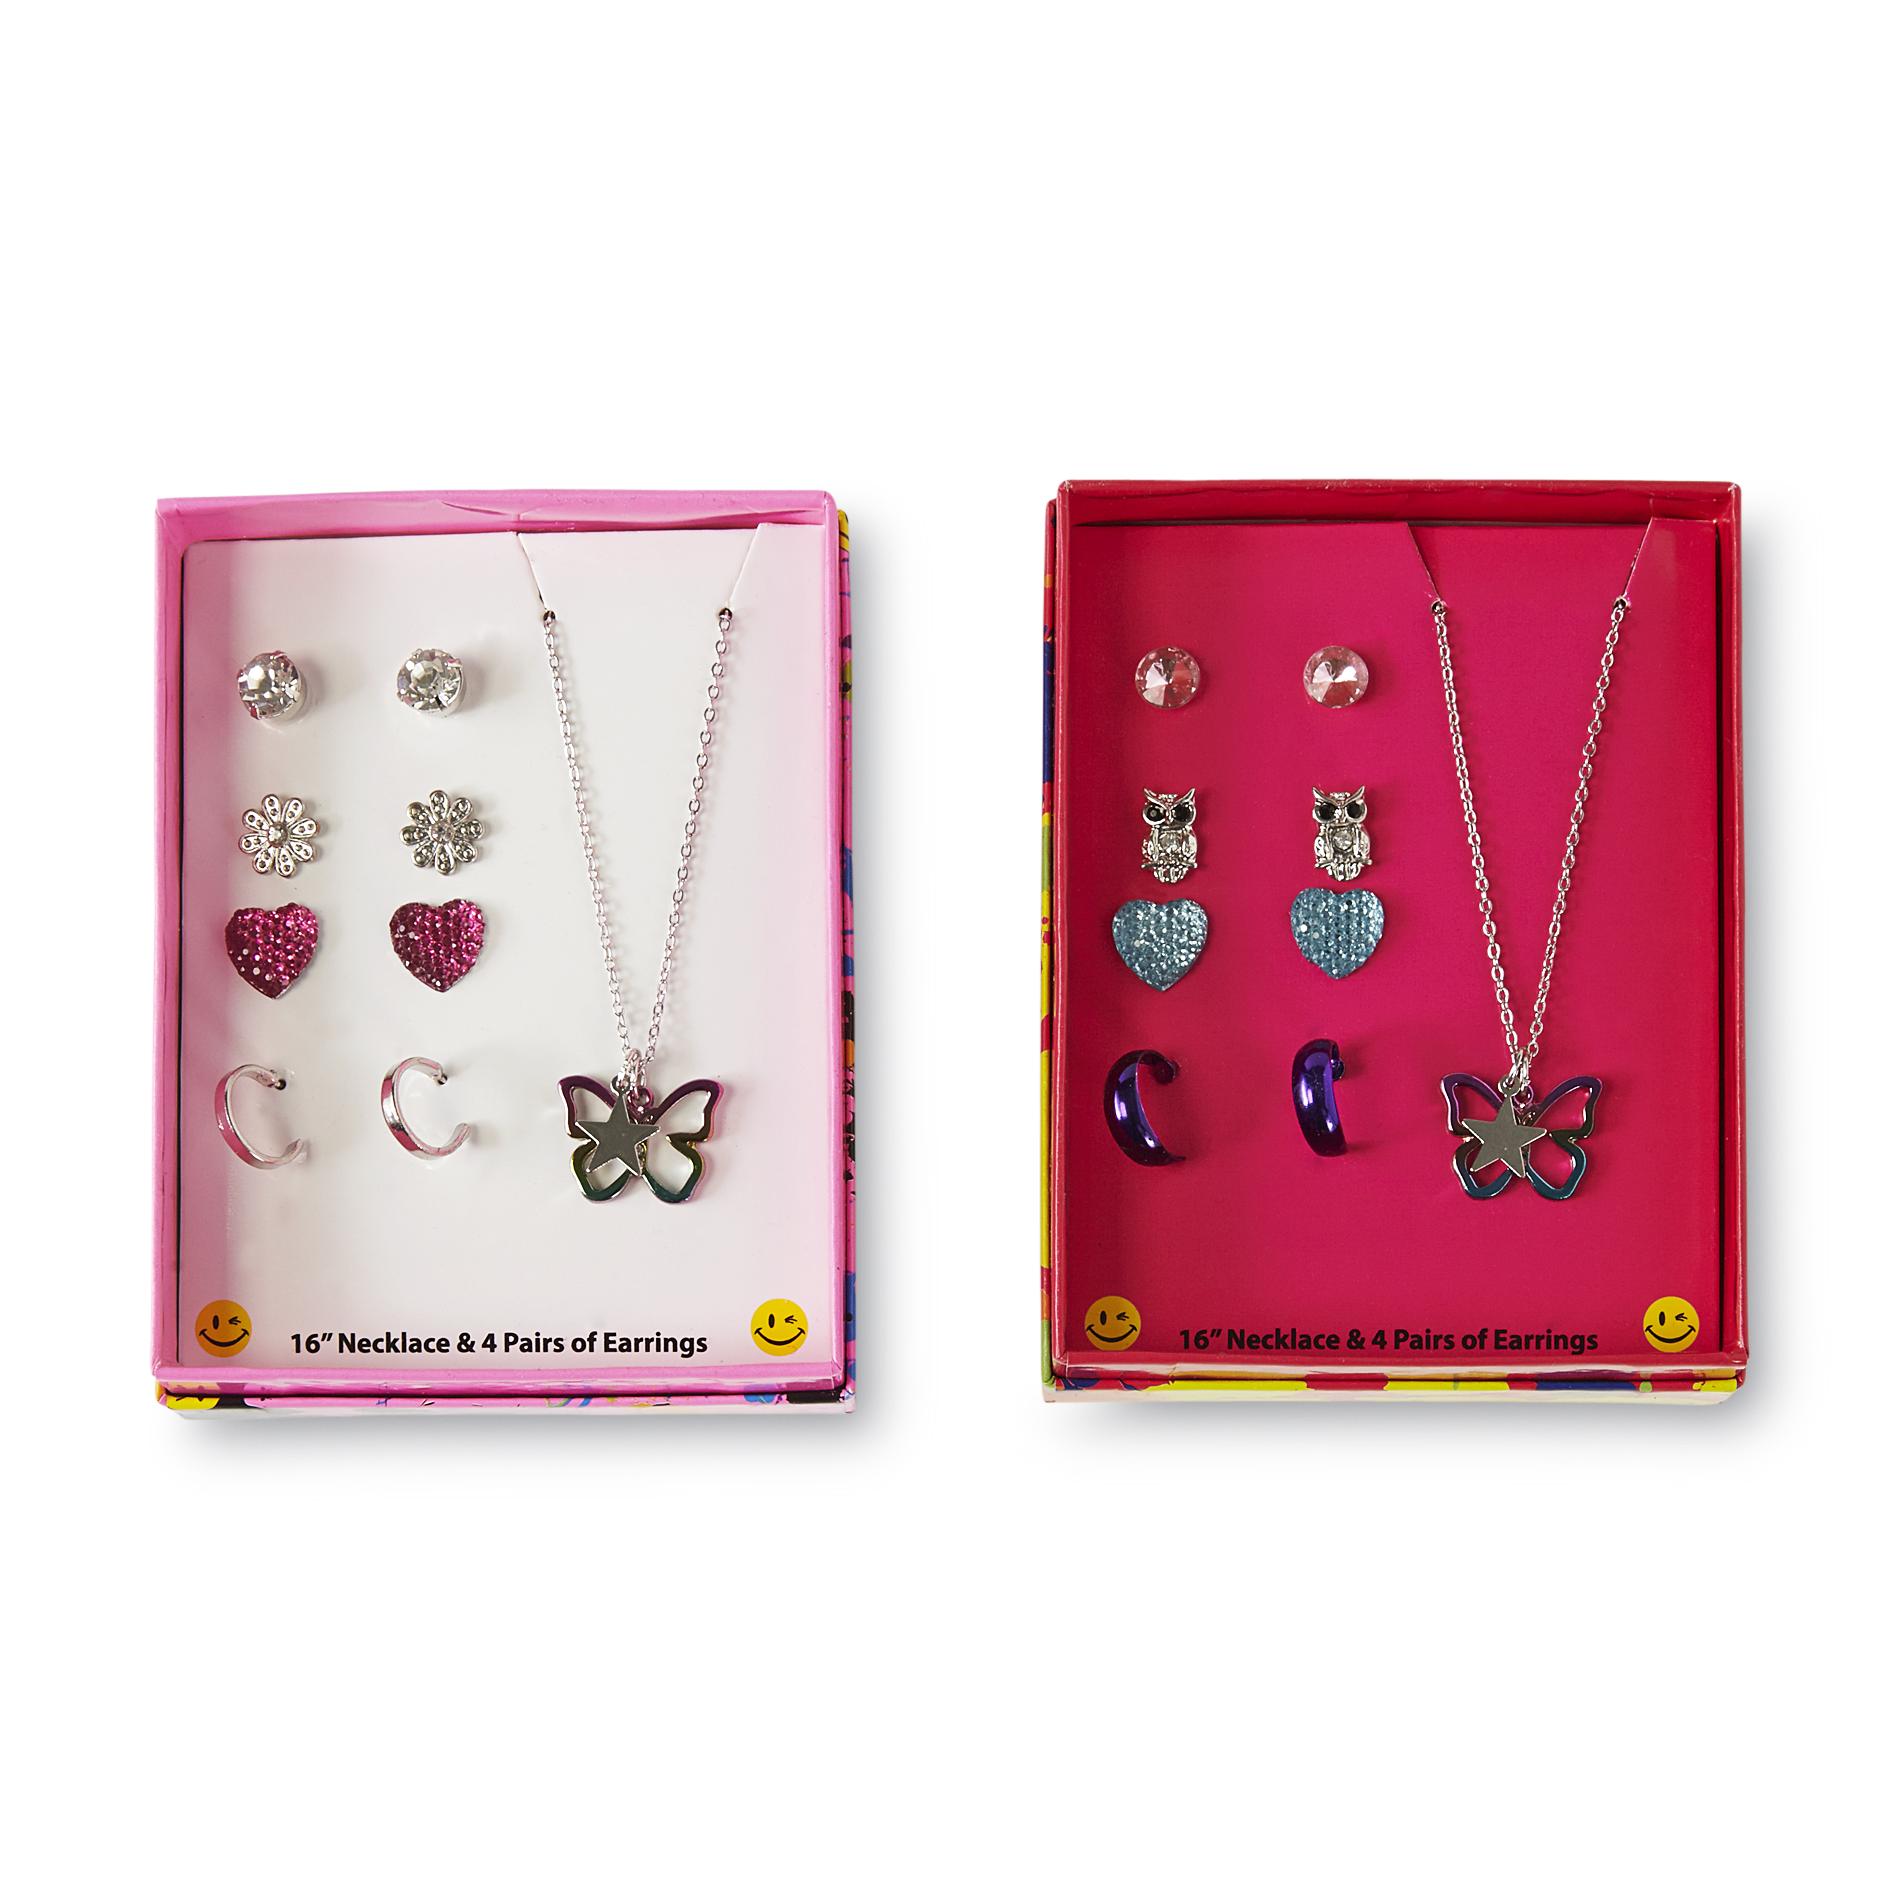 Joe Boxer Girl's 8-Pairs Earrings & 2 Best Friend Necklaces - Butterfly